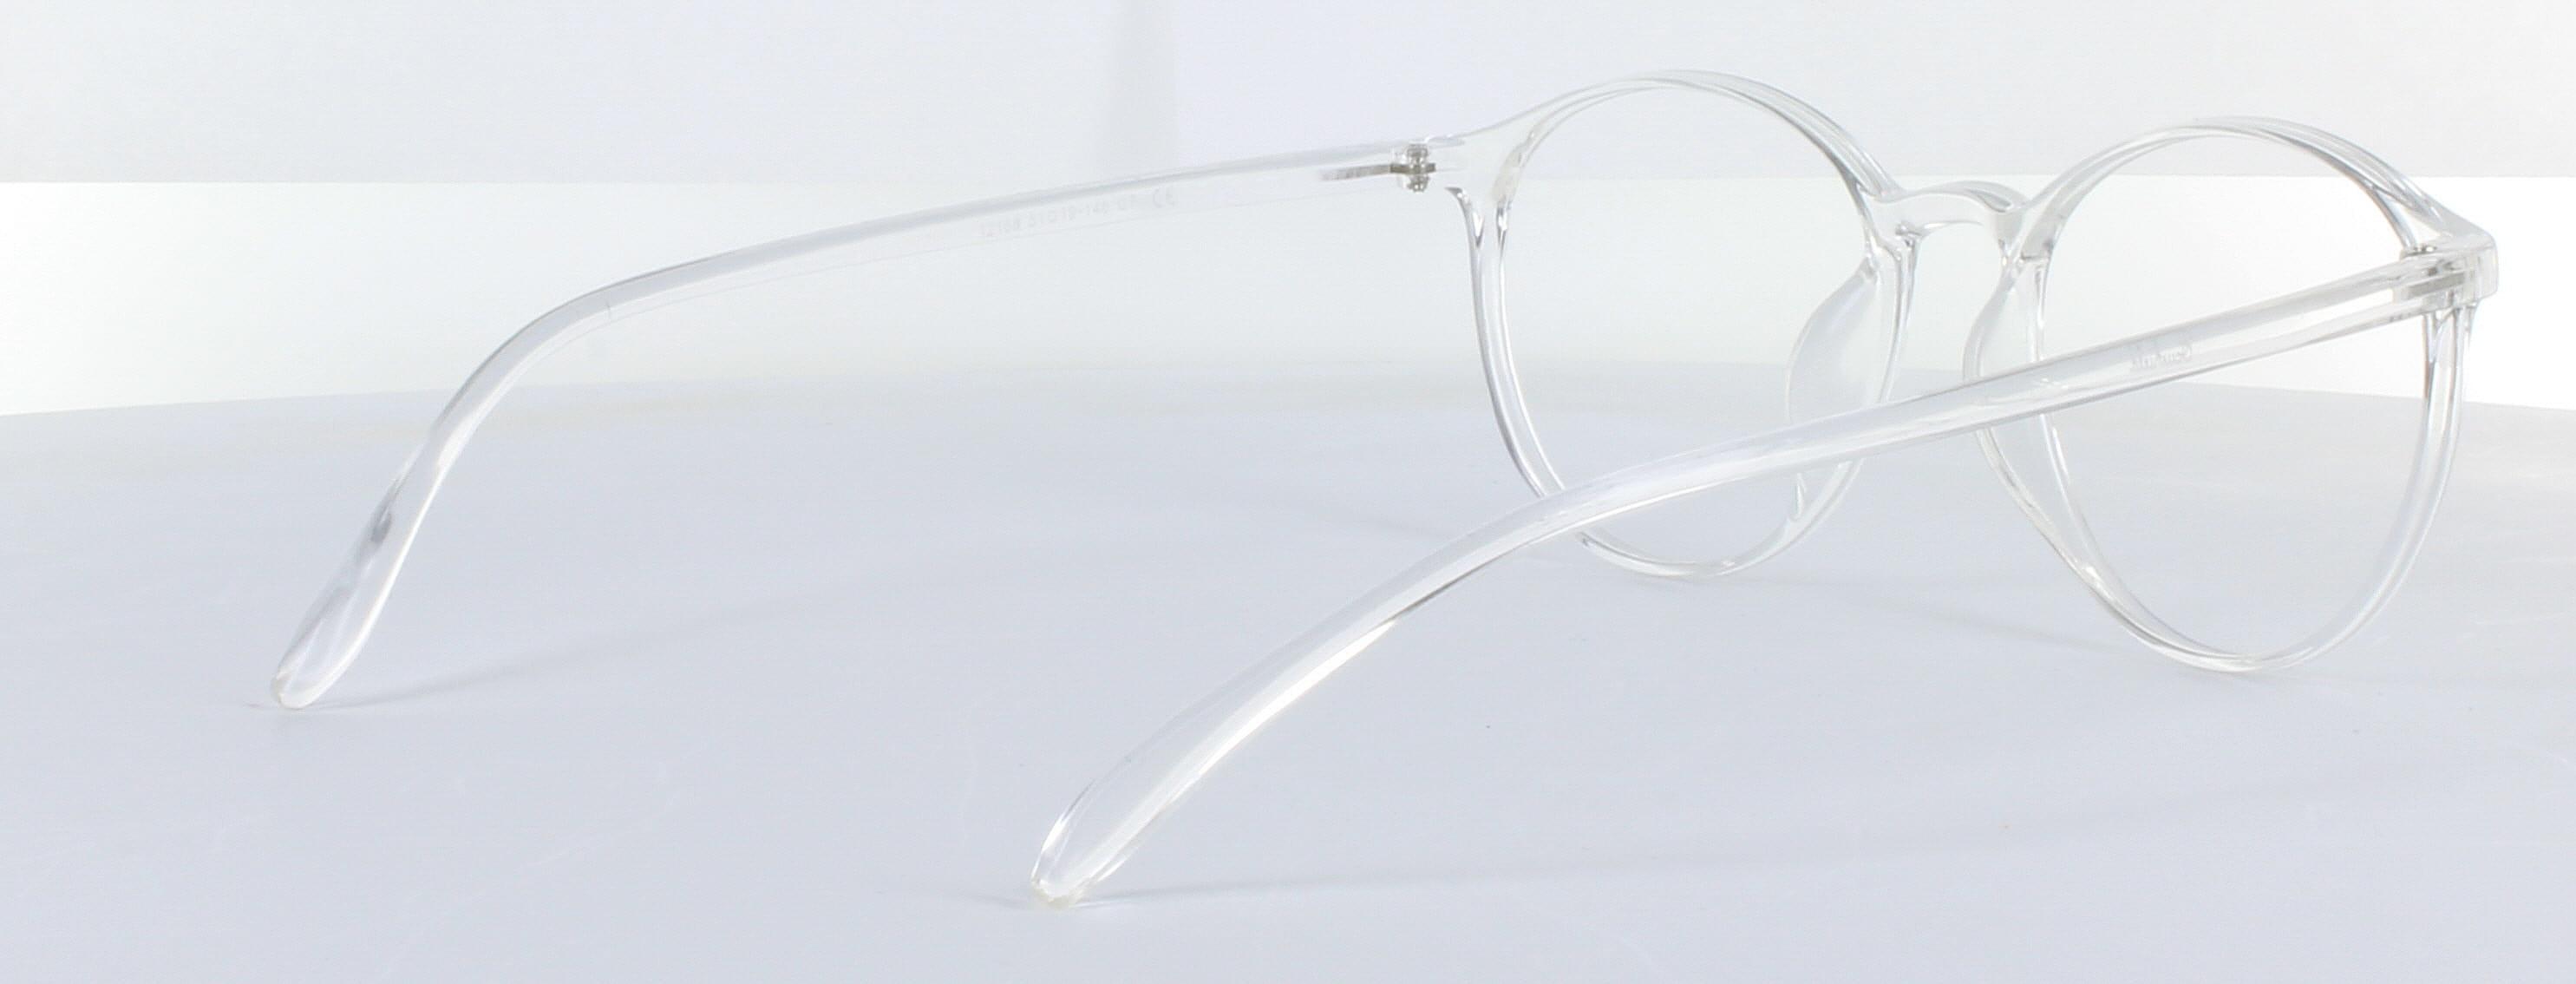 Ocushield Carson Clear Full Rim Anti Blue Light Glasses - Image View 4